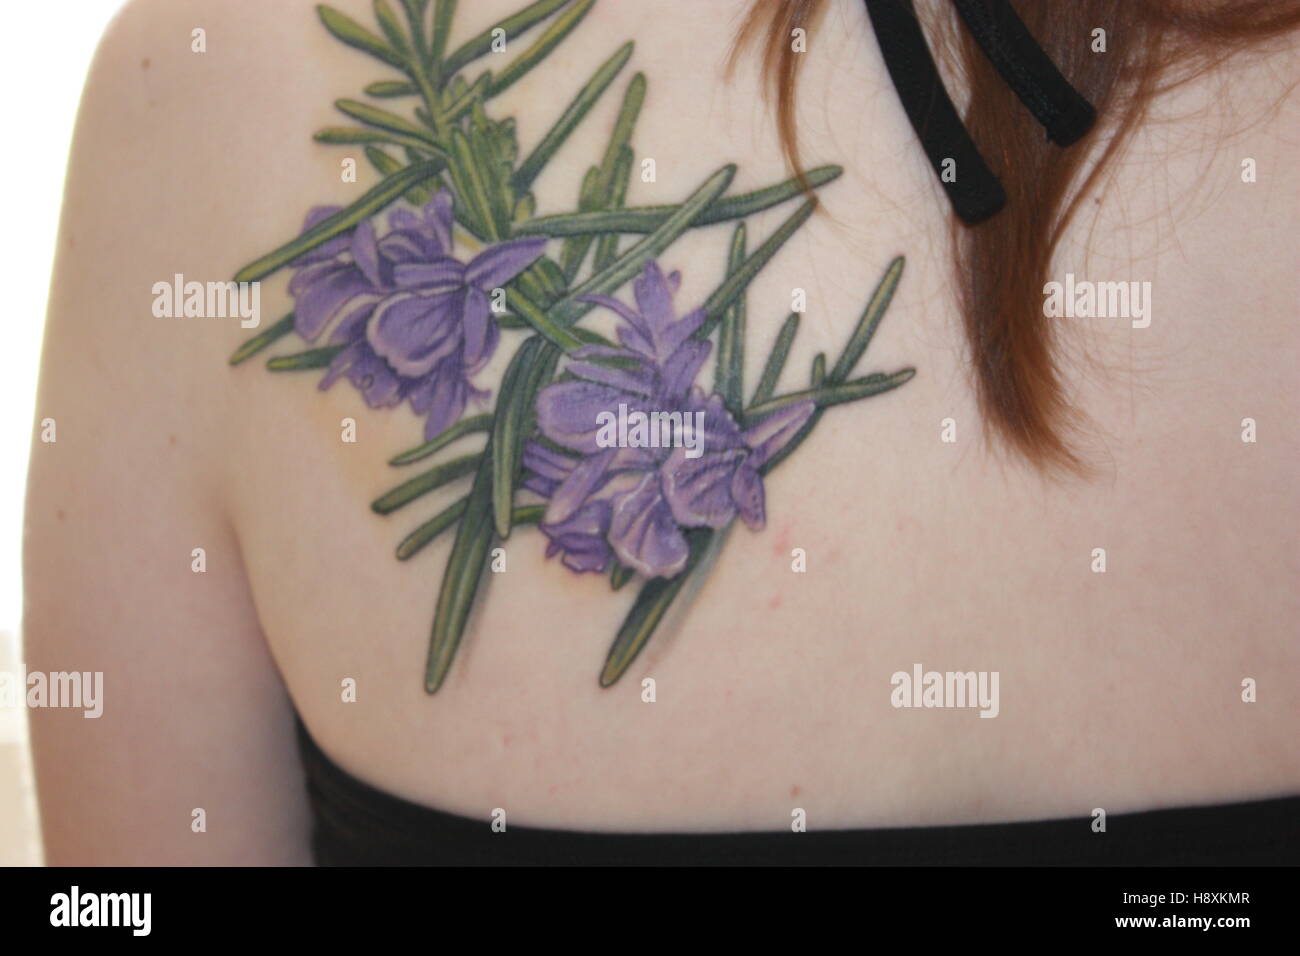 Tatuaje de flor morada fotografías e imágenes de alta resolución - Alamy